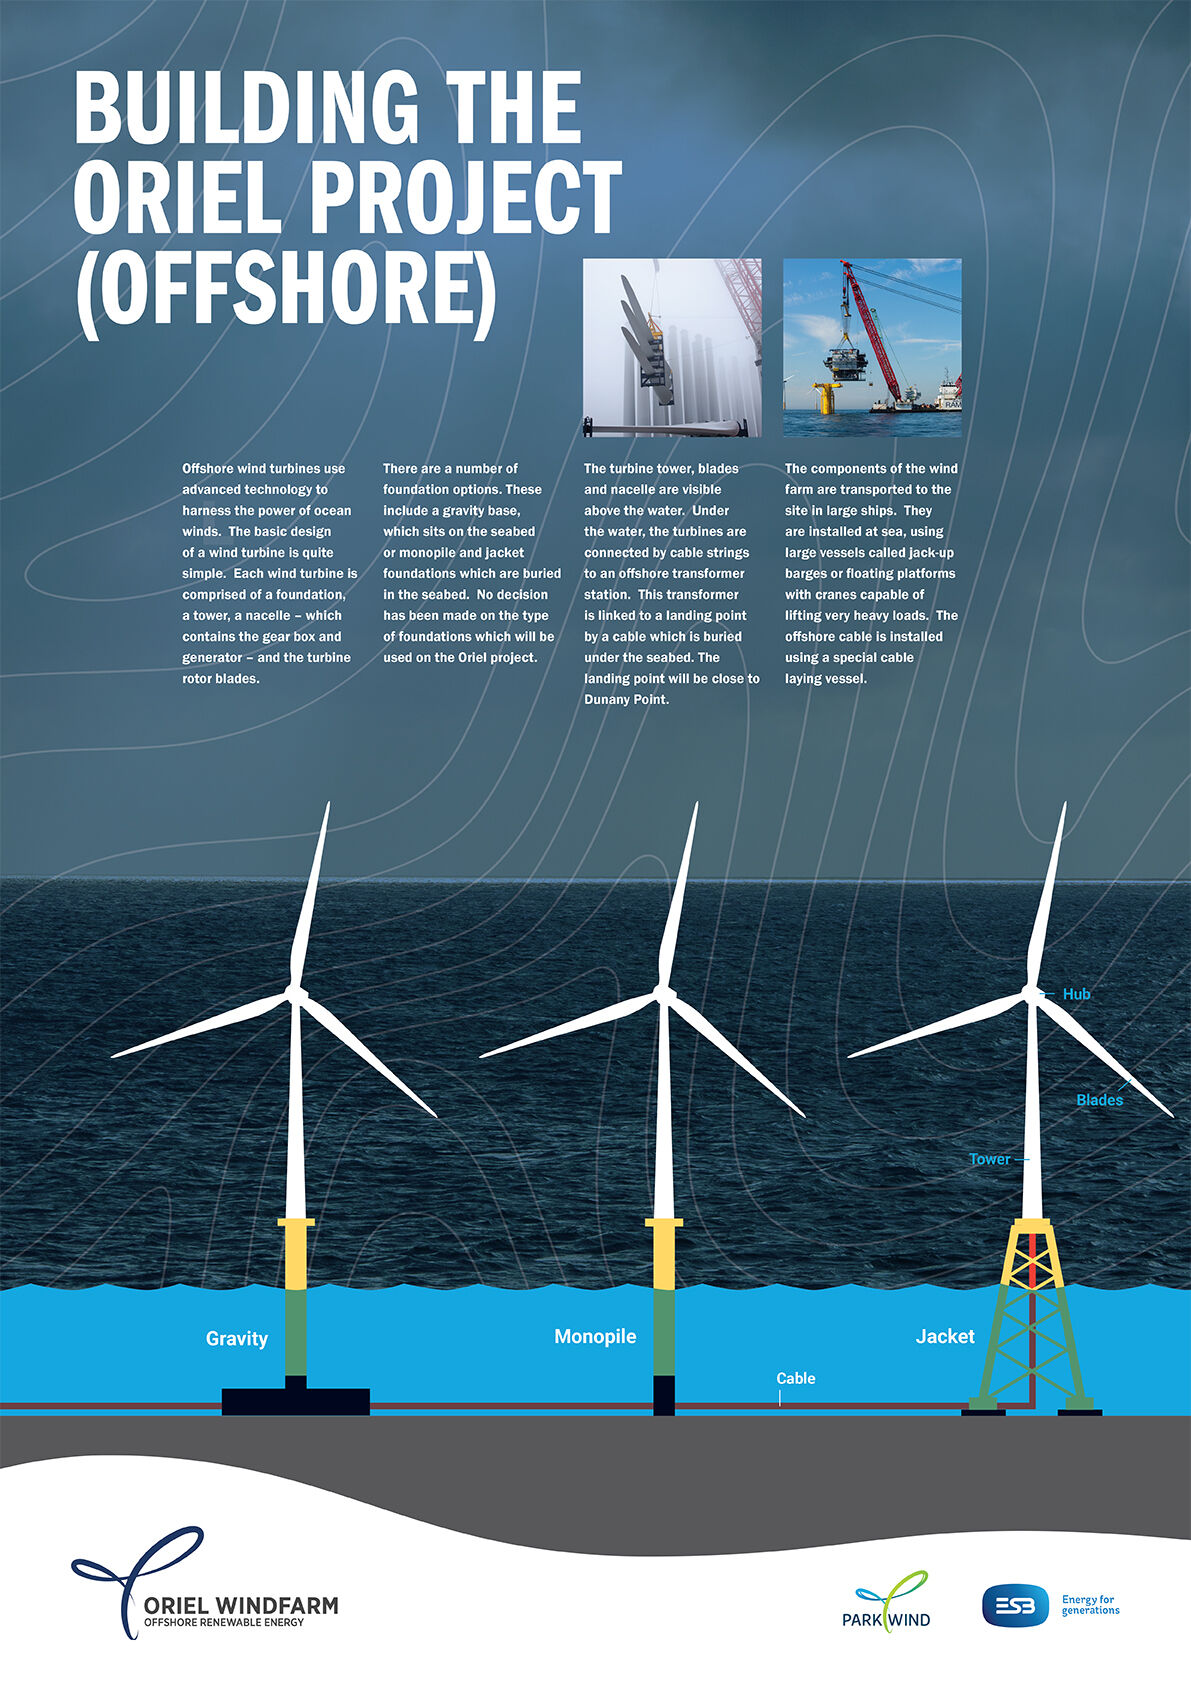 Building the Oriel project offshore